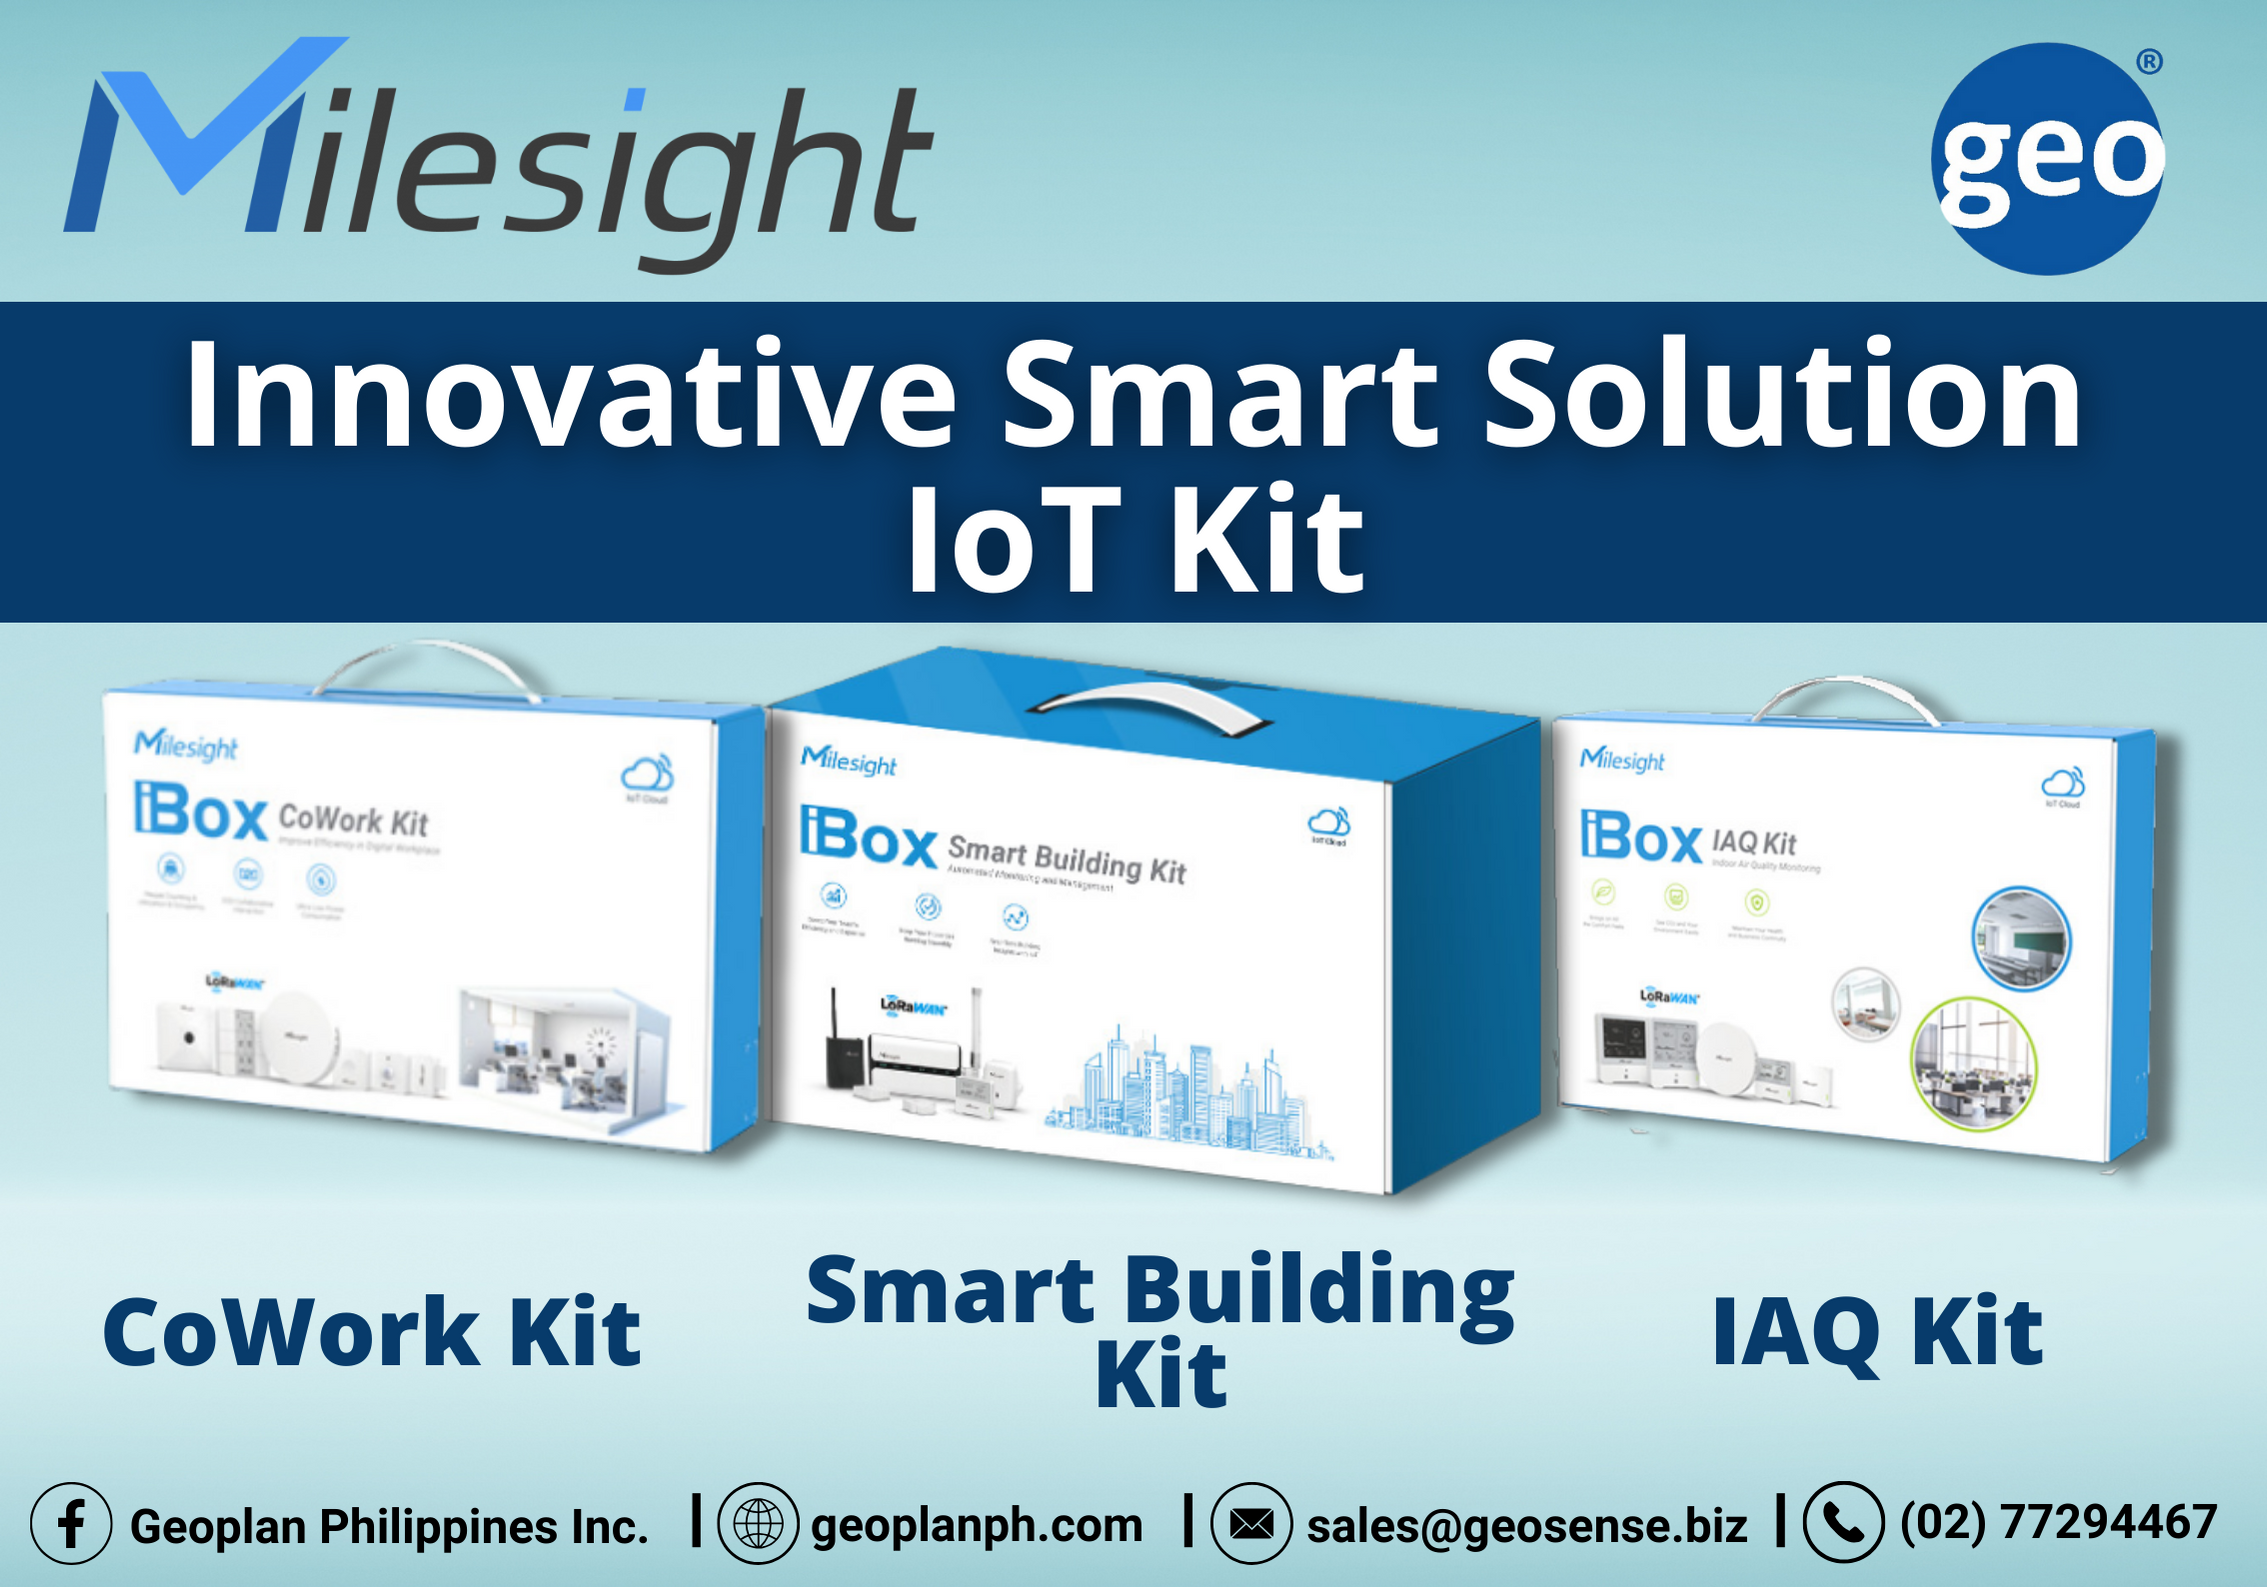 Milesight: The Most Innovative Smart Solution IoT Kit